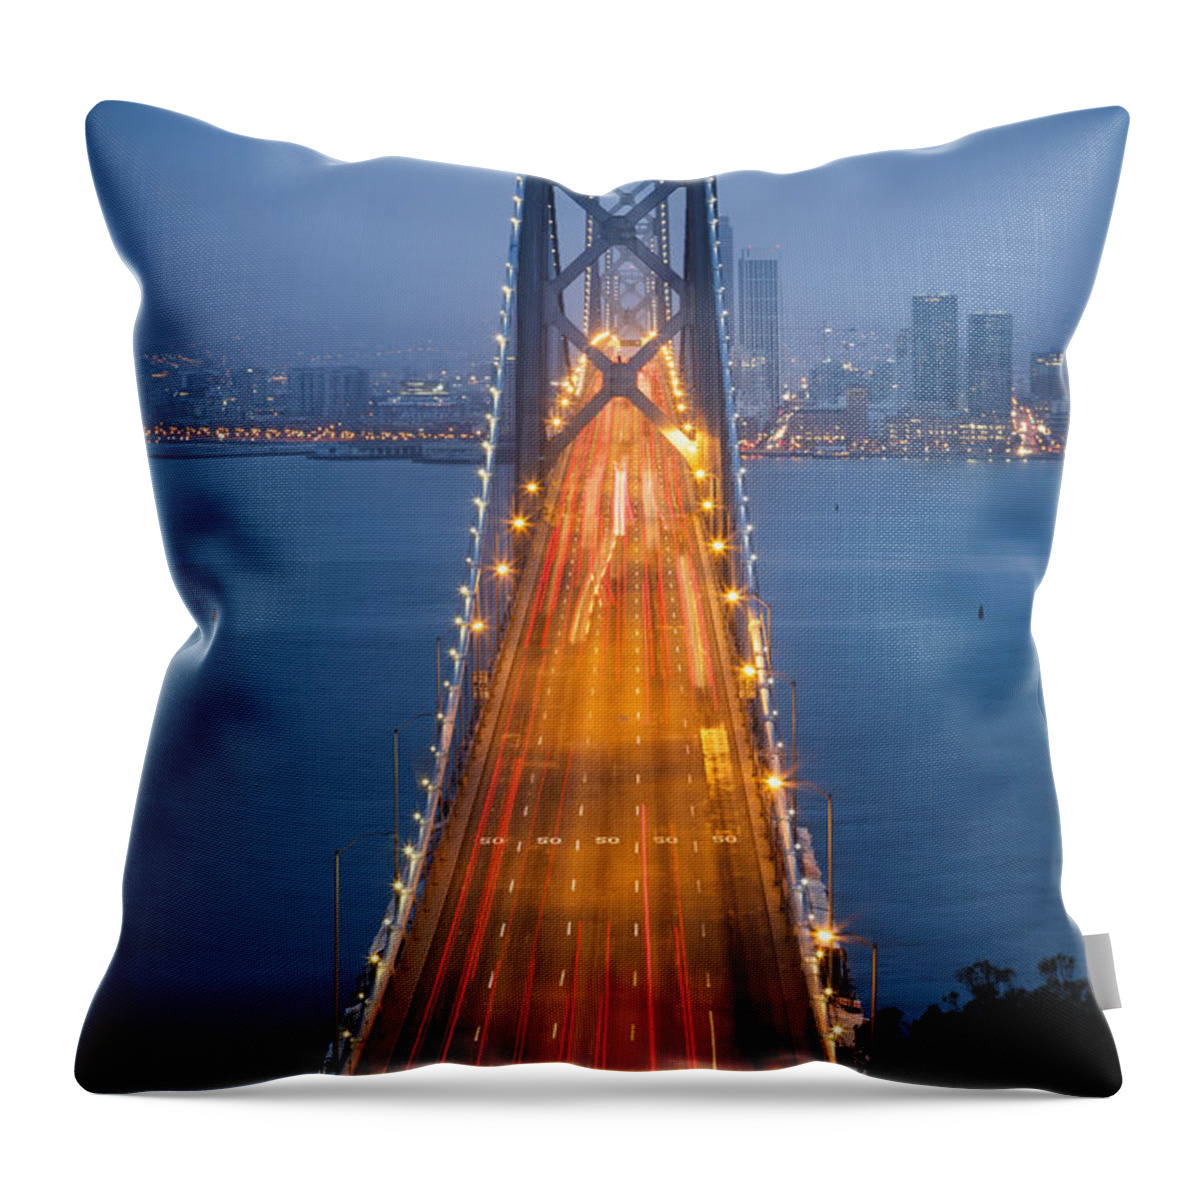 3scape Throw Pillow featuring the photograph San Francisco - Oakland Bay Bridge by Adam Romanowicz